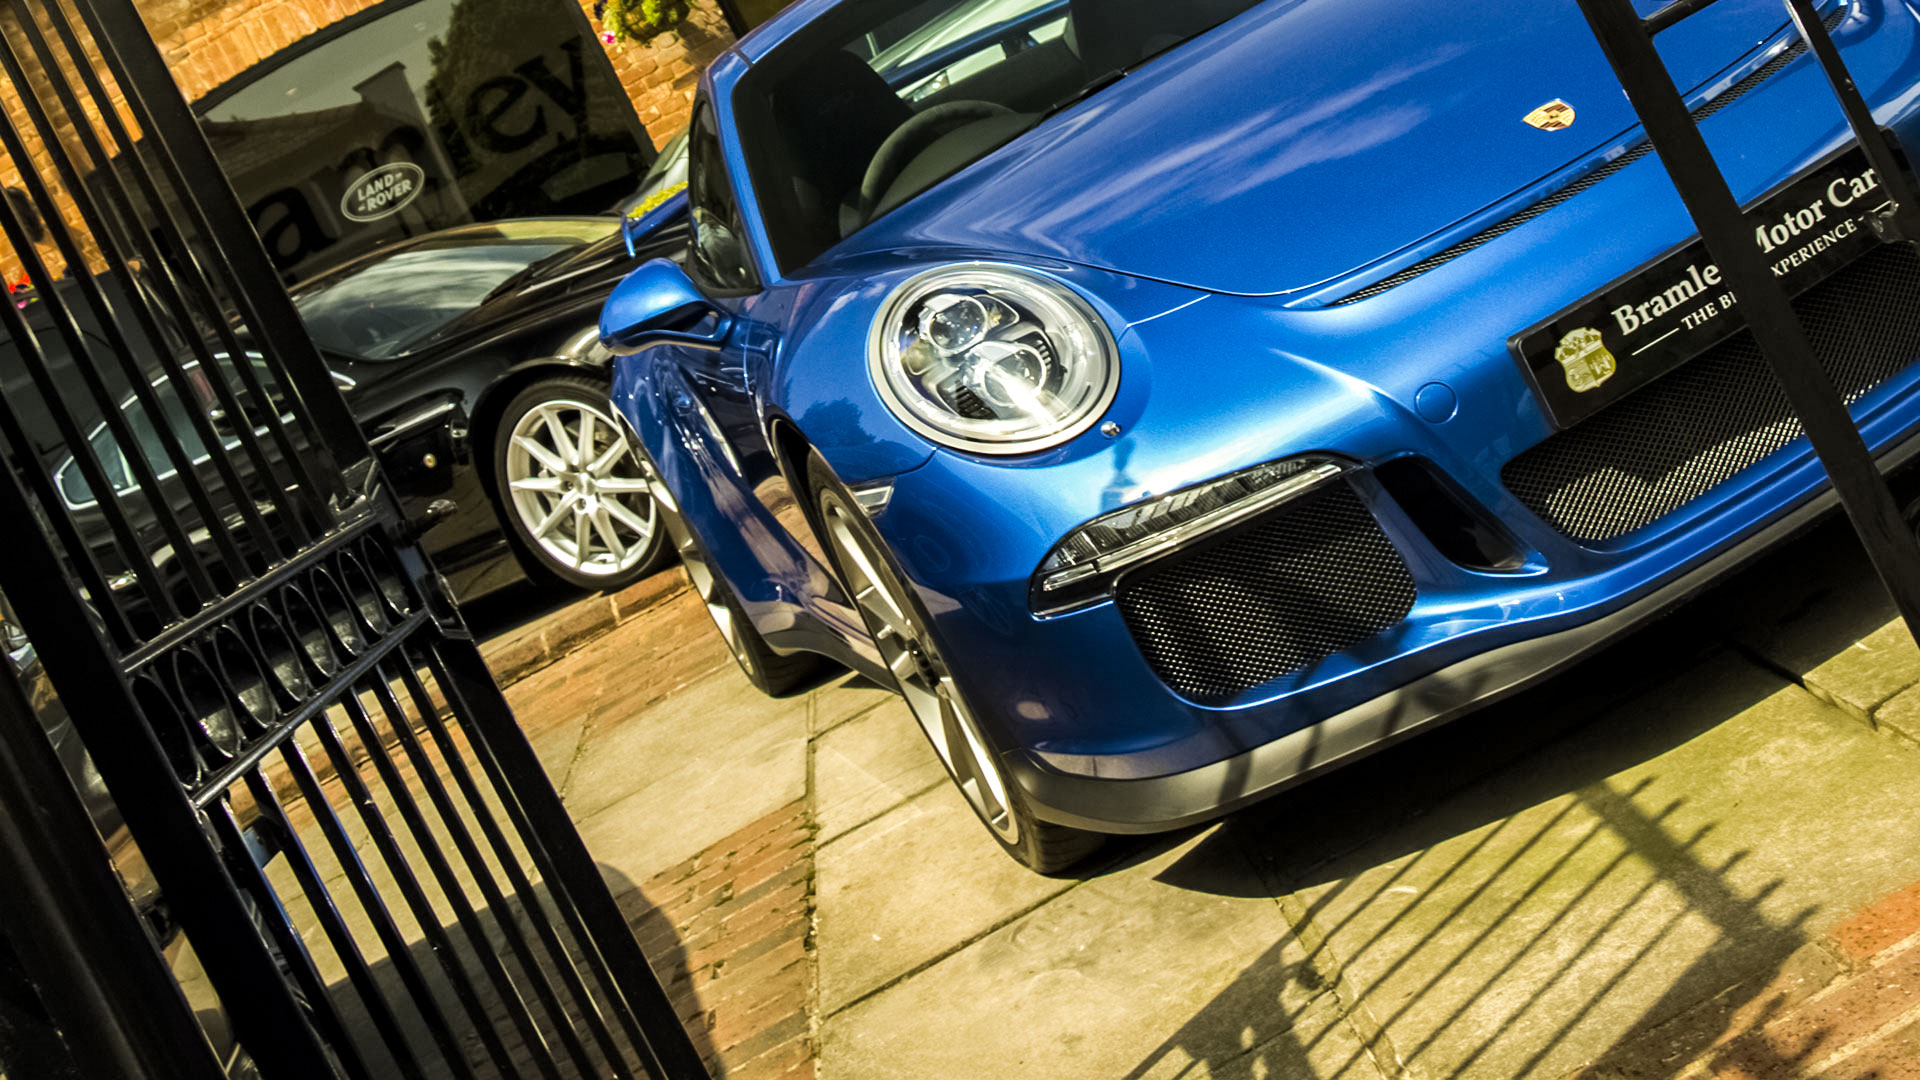 Porsche dealer in Surrey near London